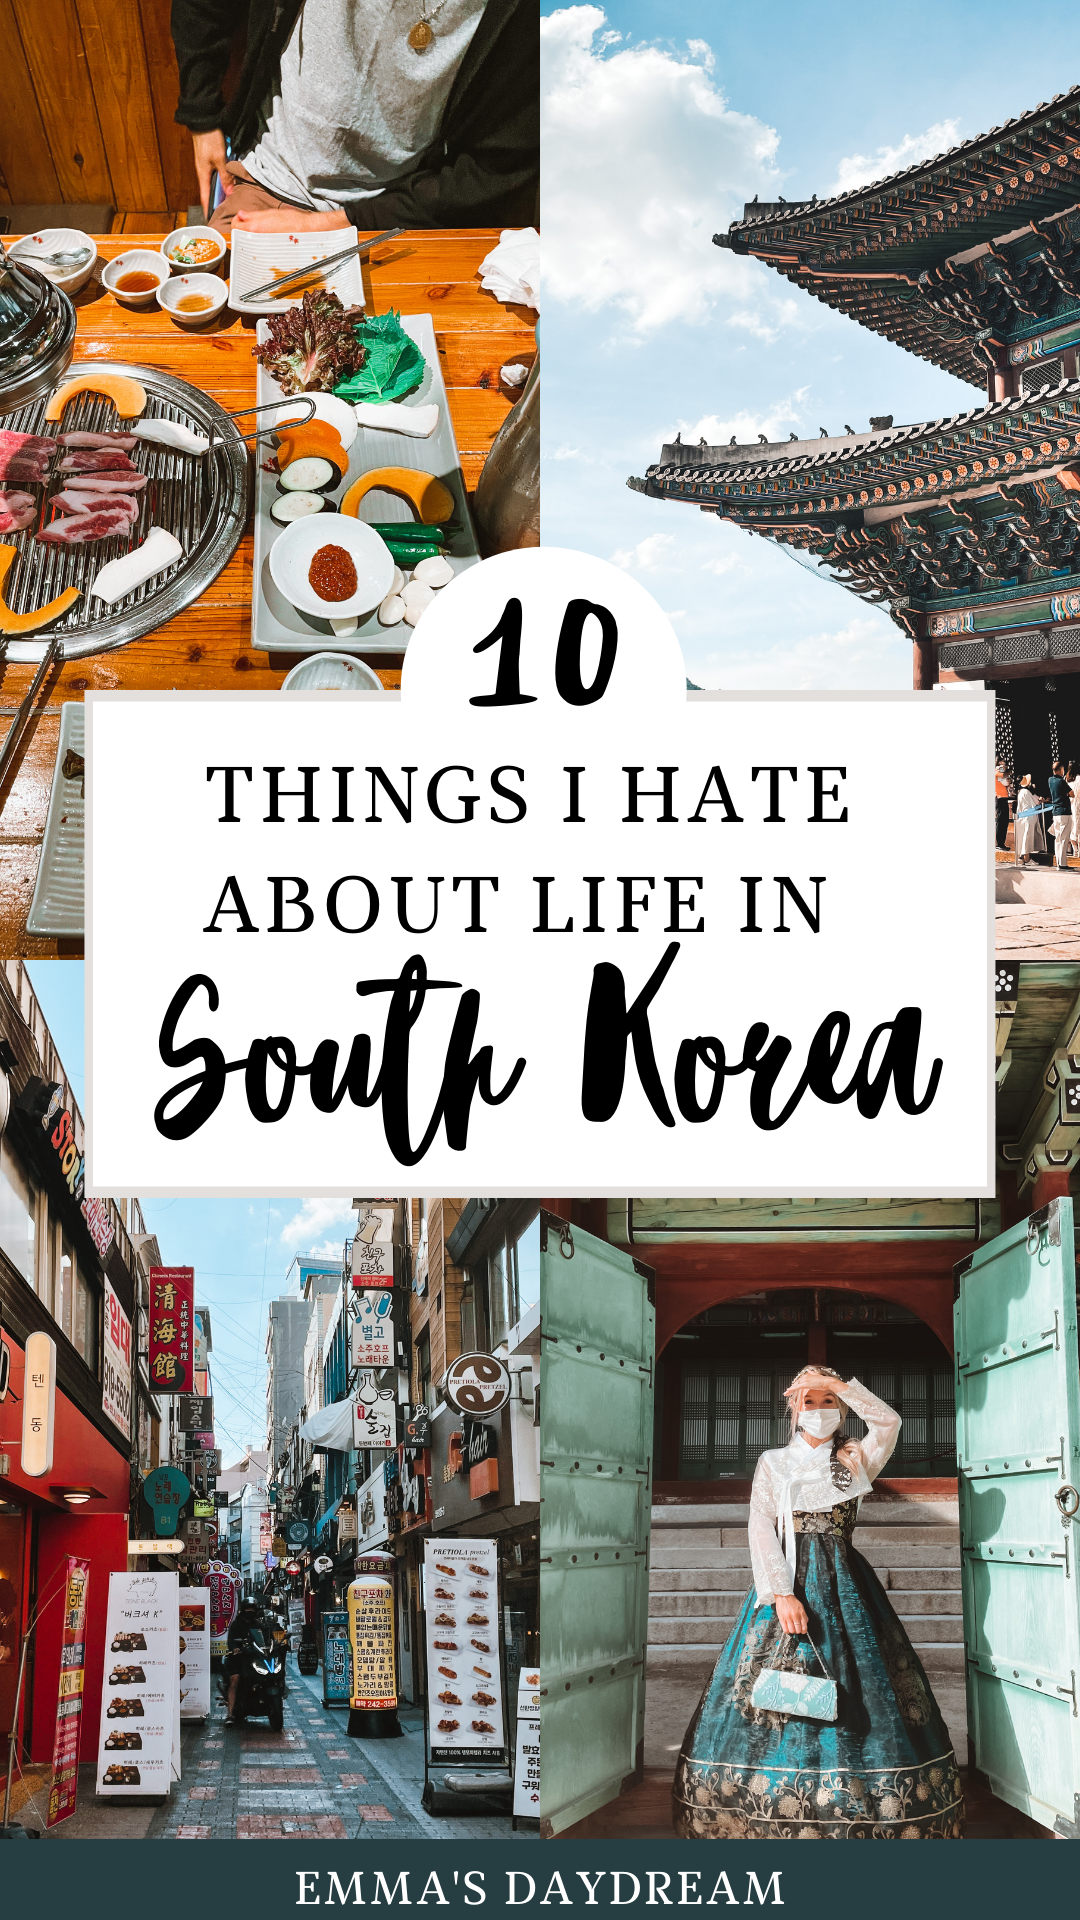 Life in South Korea